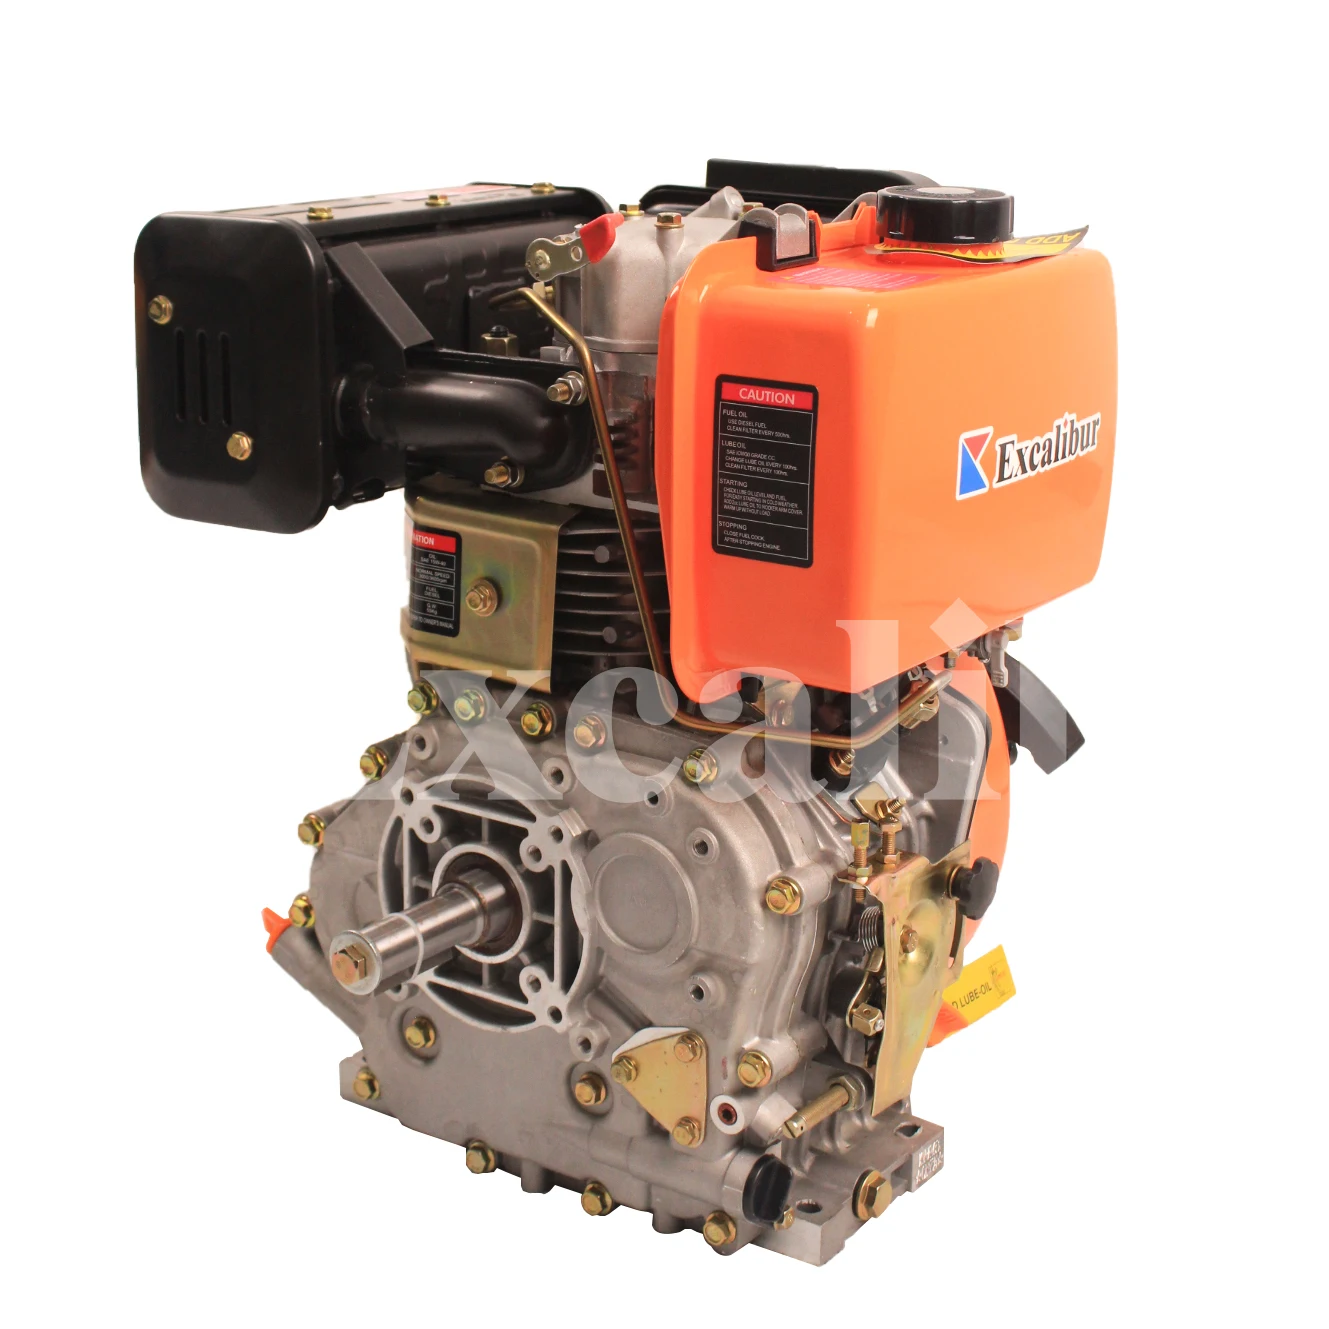 
Excalibur small generator concrete mixer water pump marine air cooled 16hp 12hp 10hp 5hp diesel engine sales price 